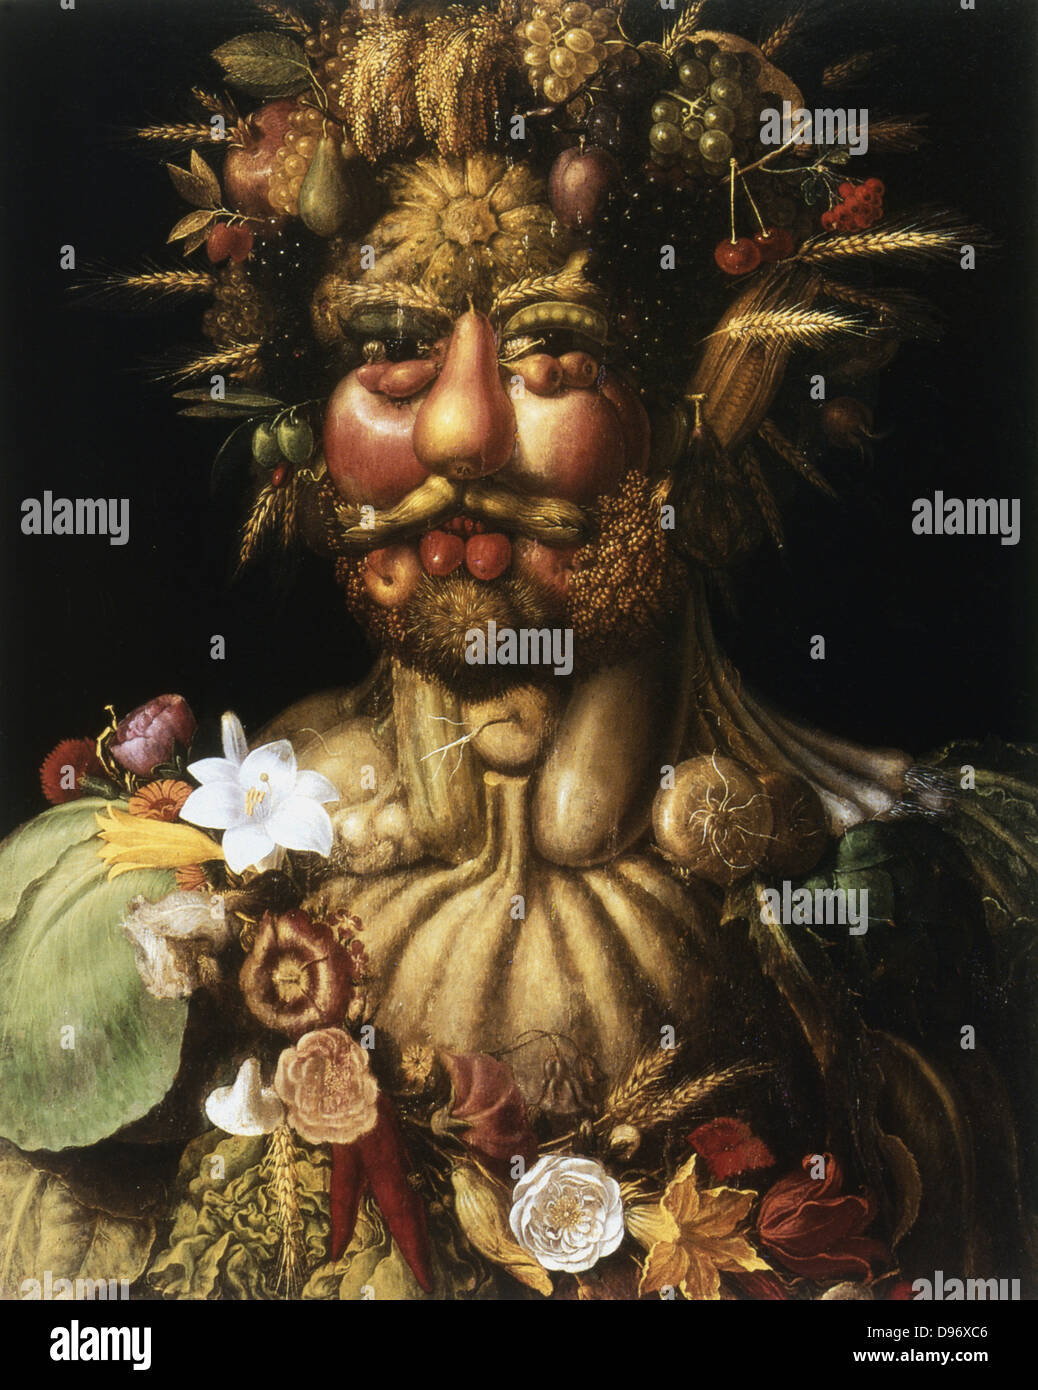 Vertumnus - Rudolf II' (c1590), showing Rudolph II (1552-1612), Holy Roman Emperor from 1576, as Vertumnus, ancient Roman god of seasons who presided over gardens and orchards. Giuseppe Arcimboldo (c1530-1593) Italian painter. Oil on canvas. Stock Photo